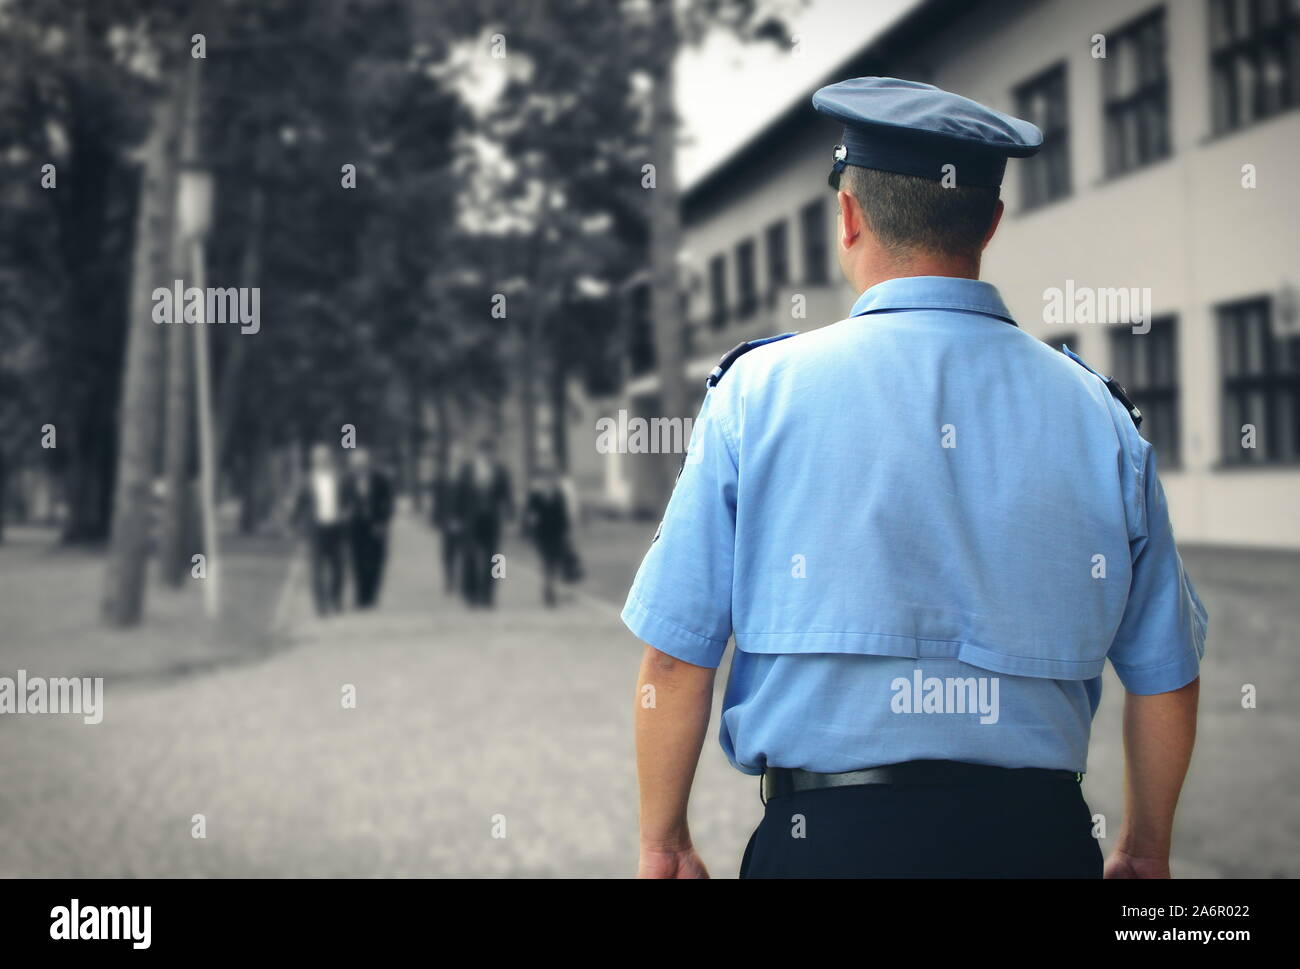 Policeman in uniform Stock Photo